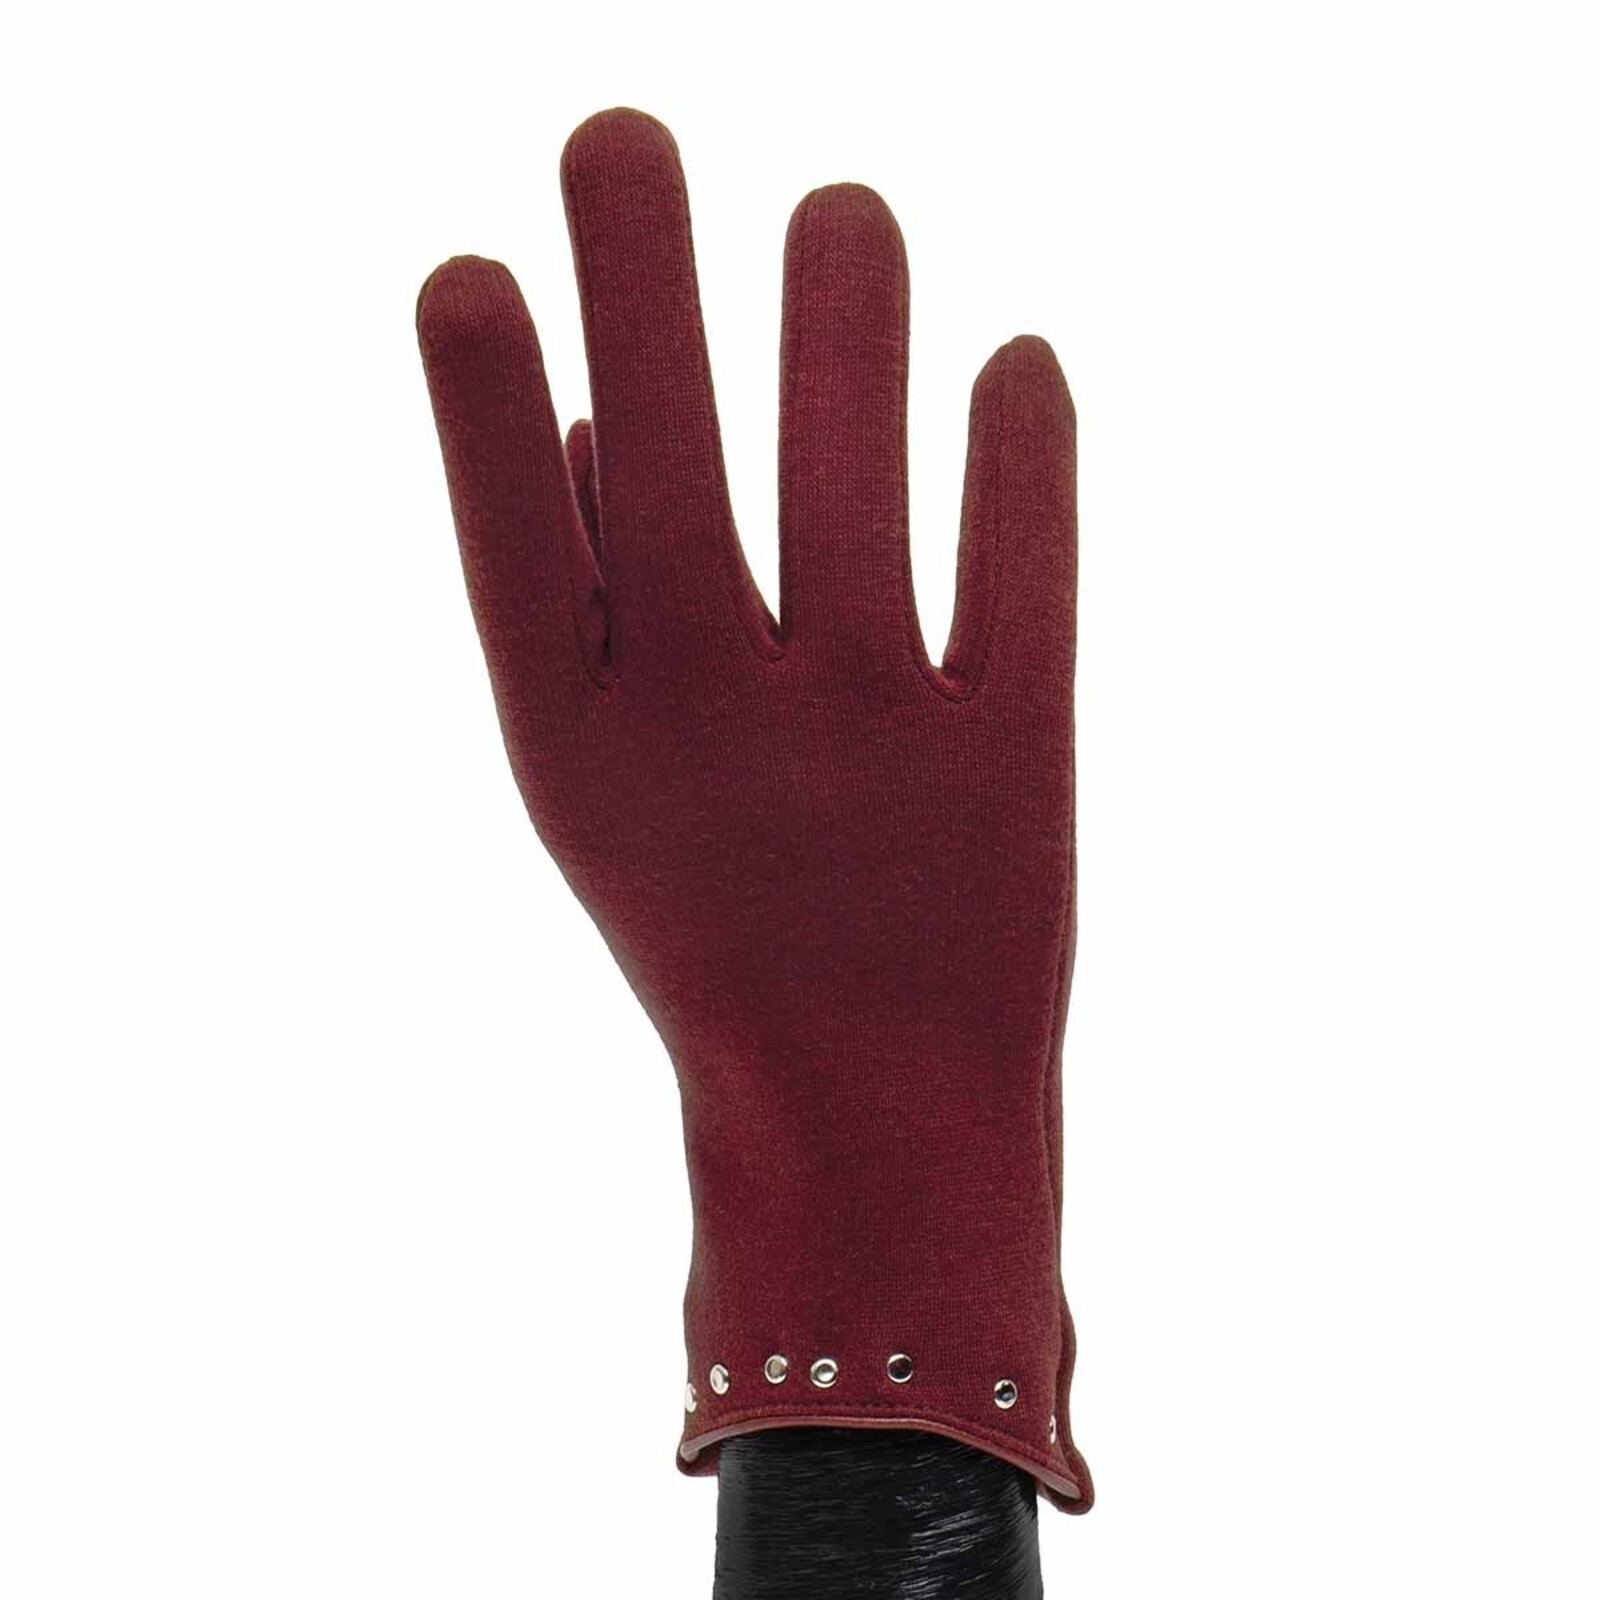 Meravic Burgundy Gloves with Stud Trim   X7985 loading=